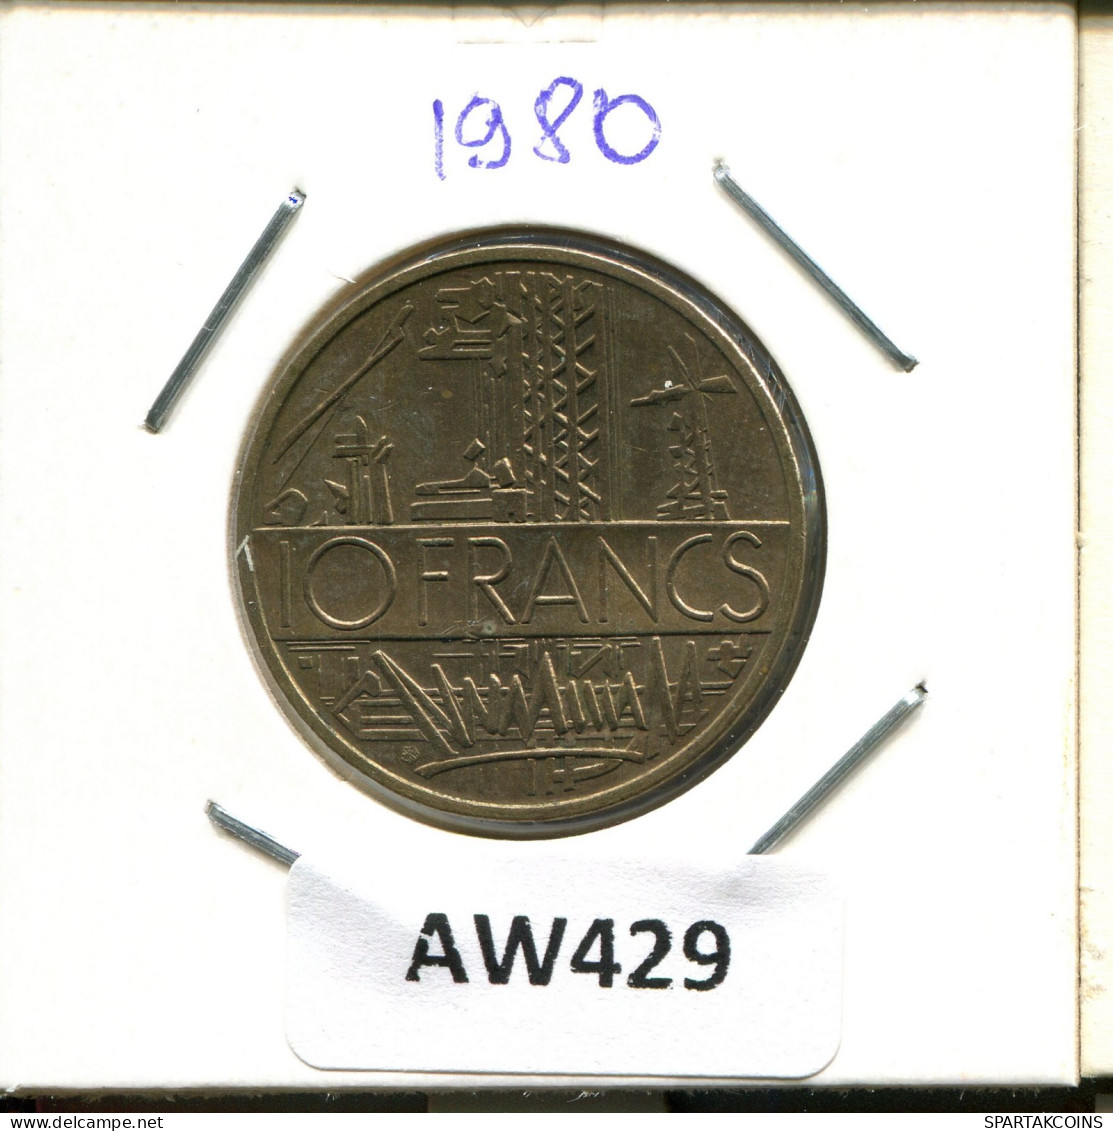 1 FRANC 1980 FRANCE Coin #AW429.U.A - 1 Franc